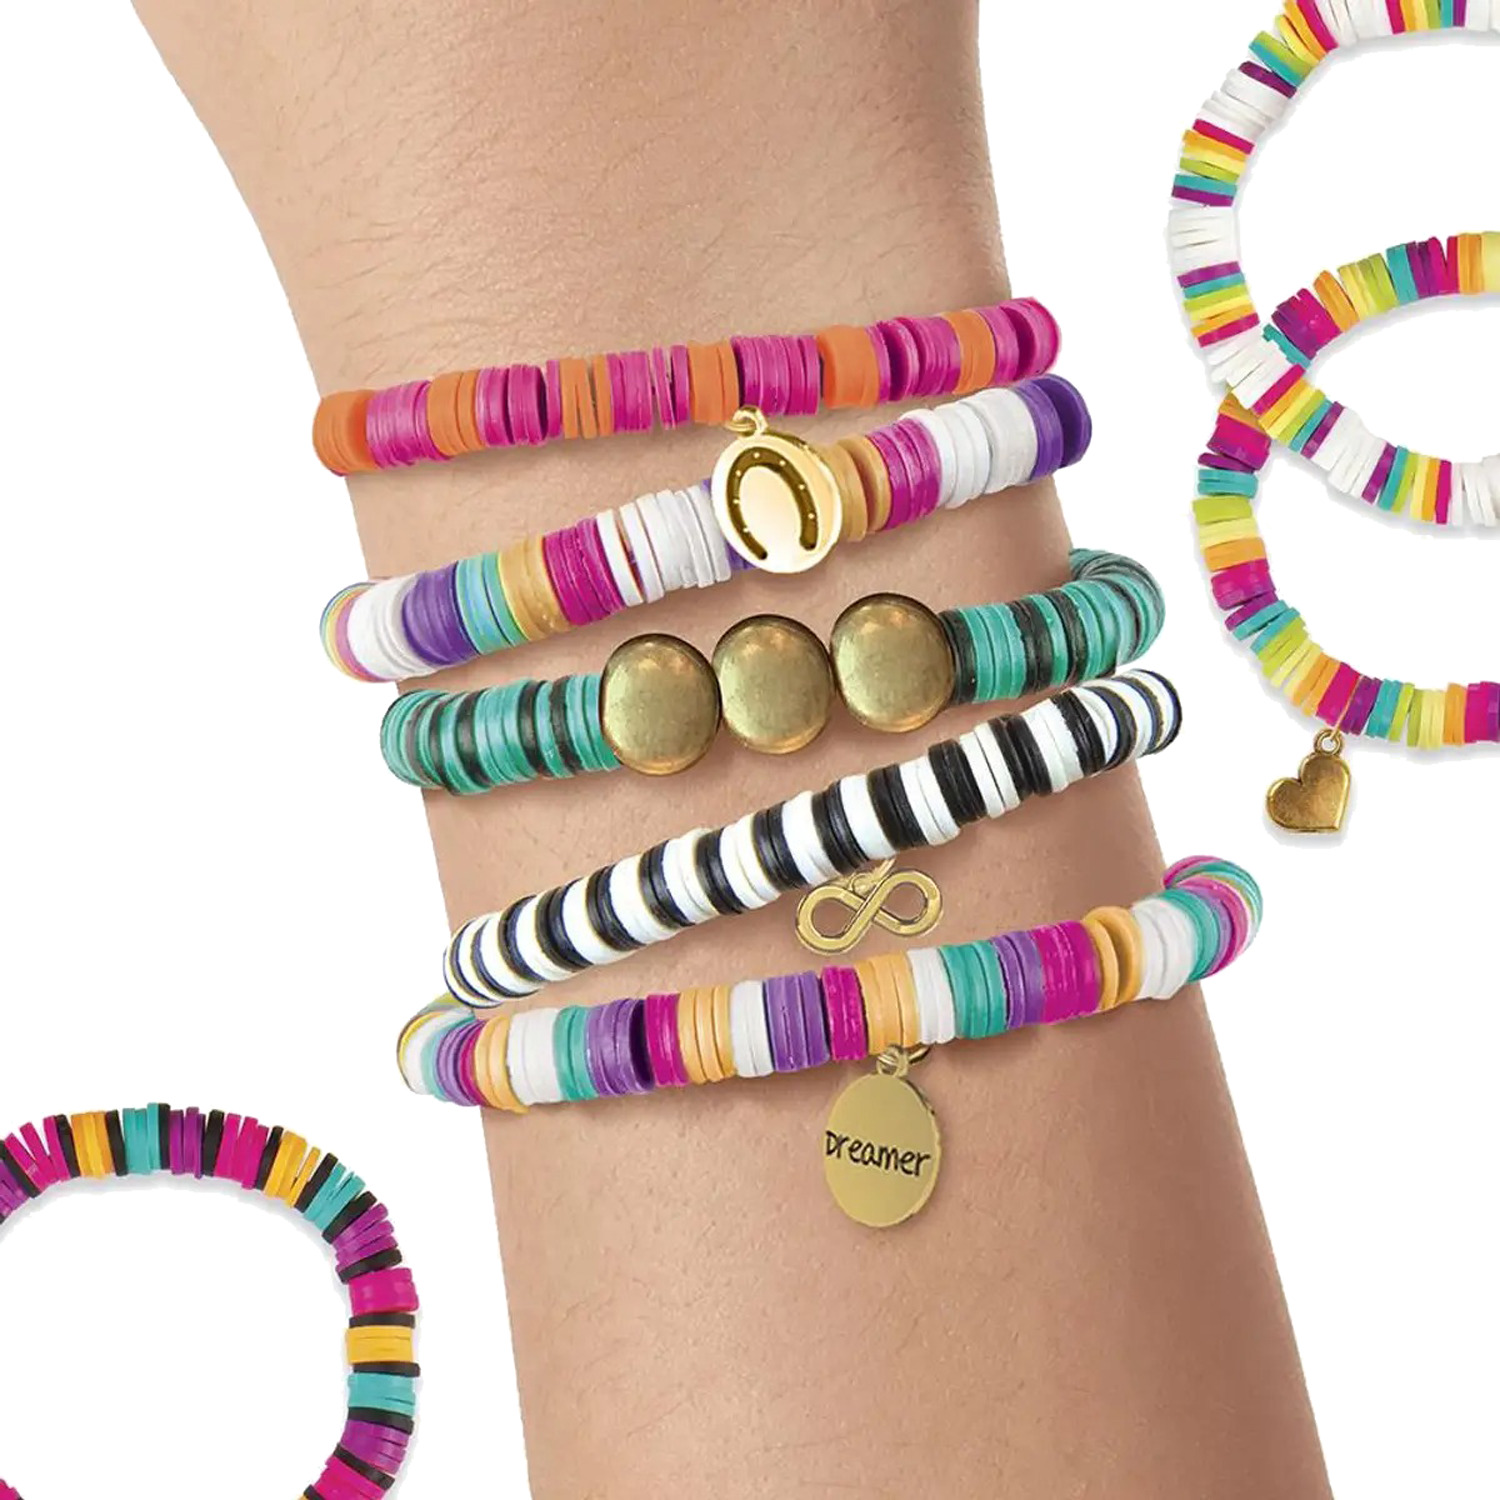 Fashion Angels - Rainbow bracelets, jewelry design kit